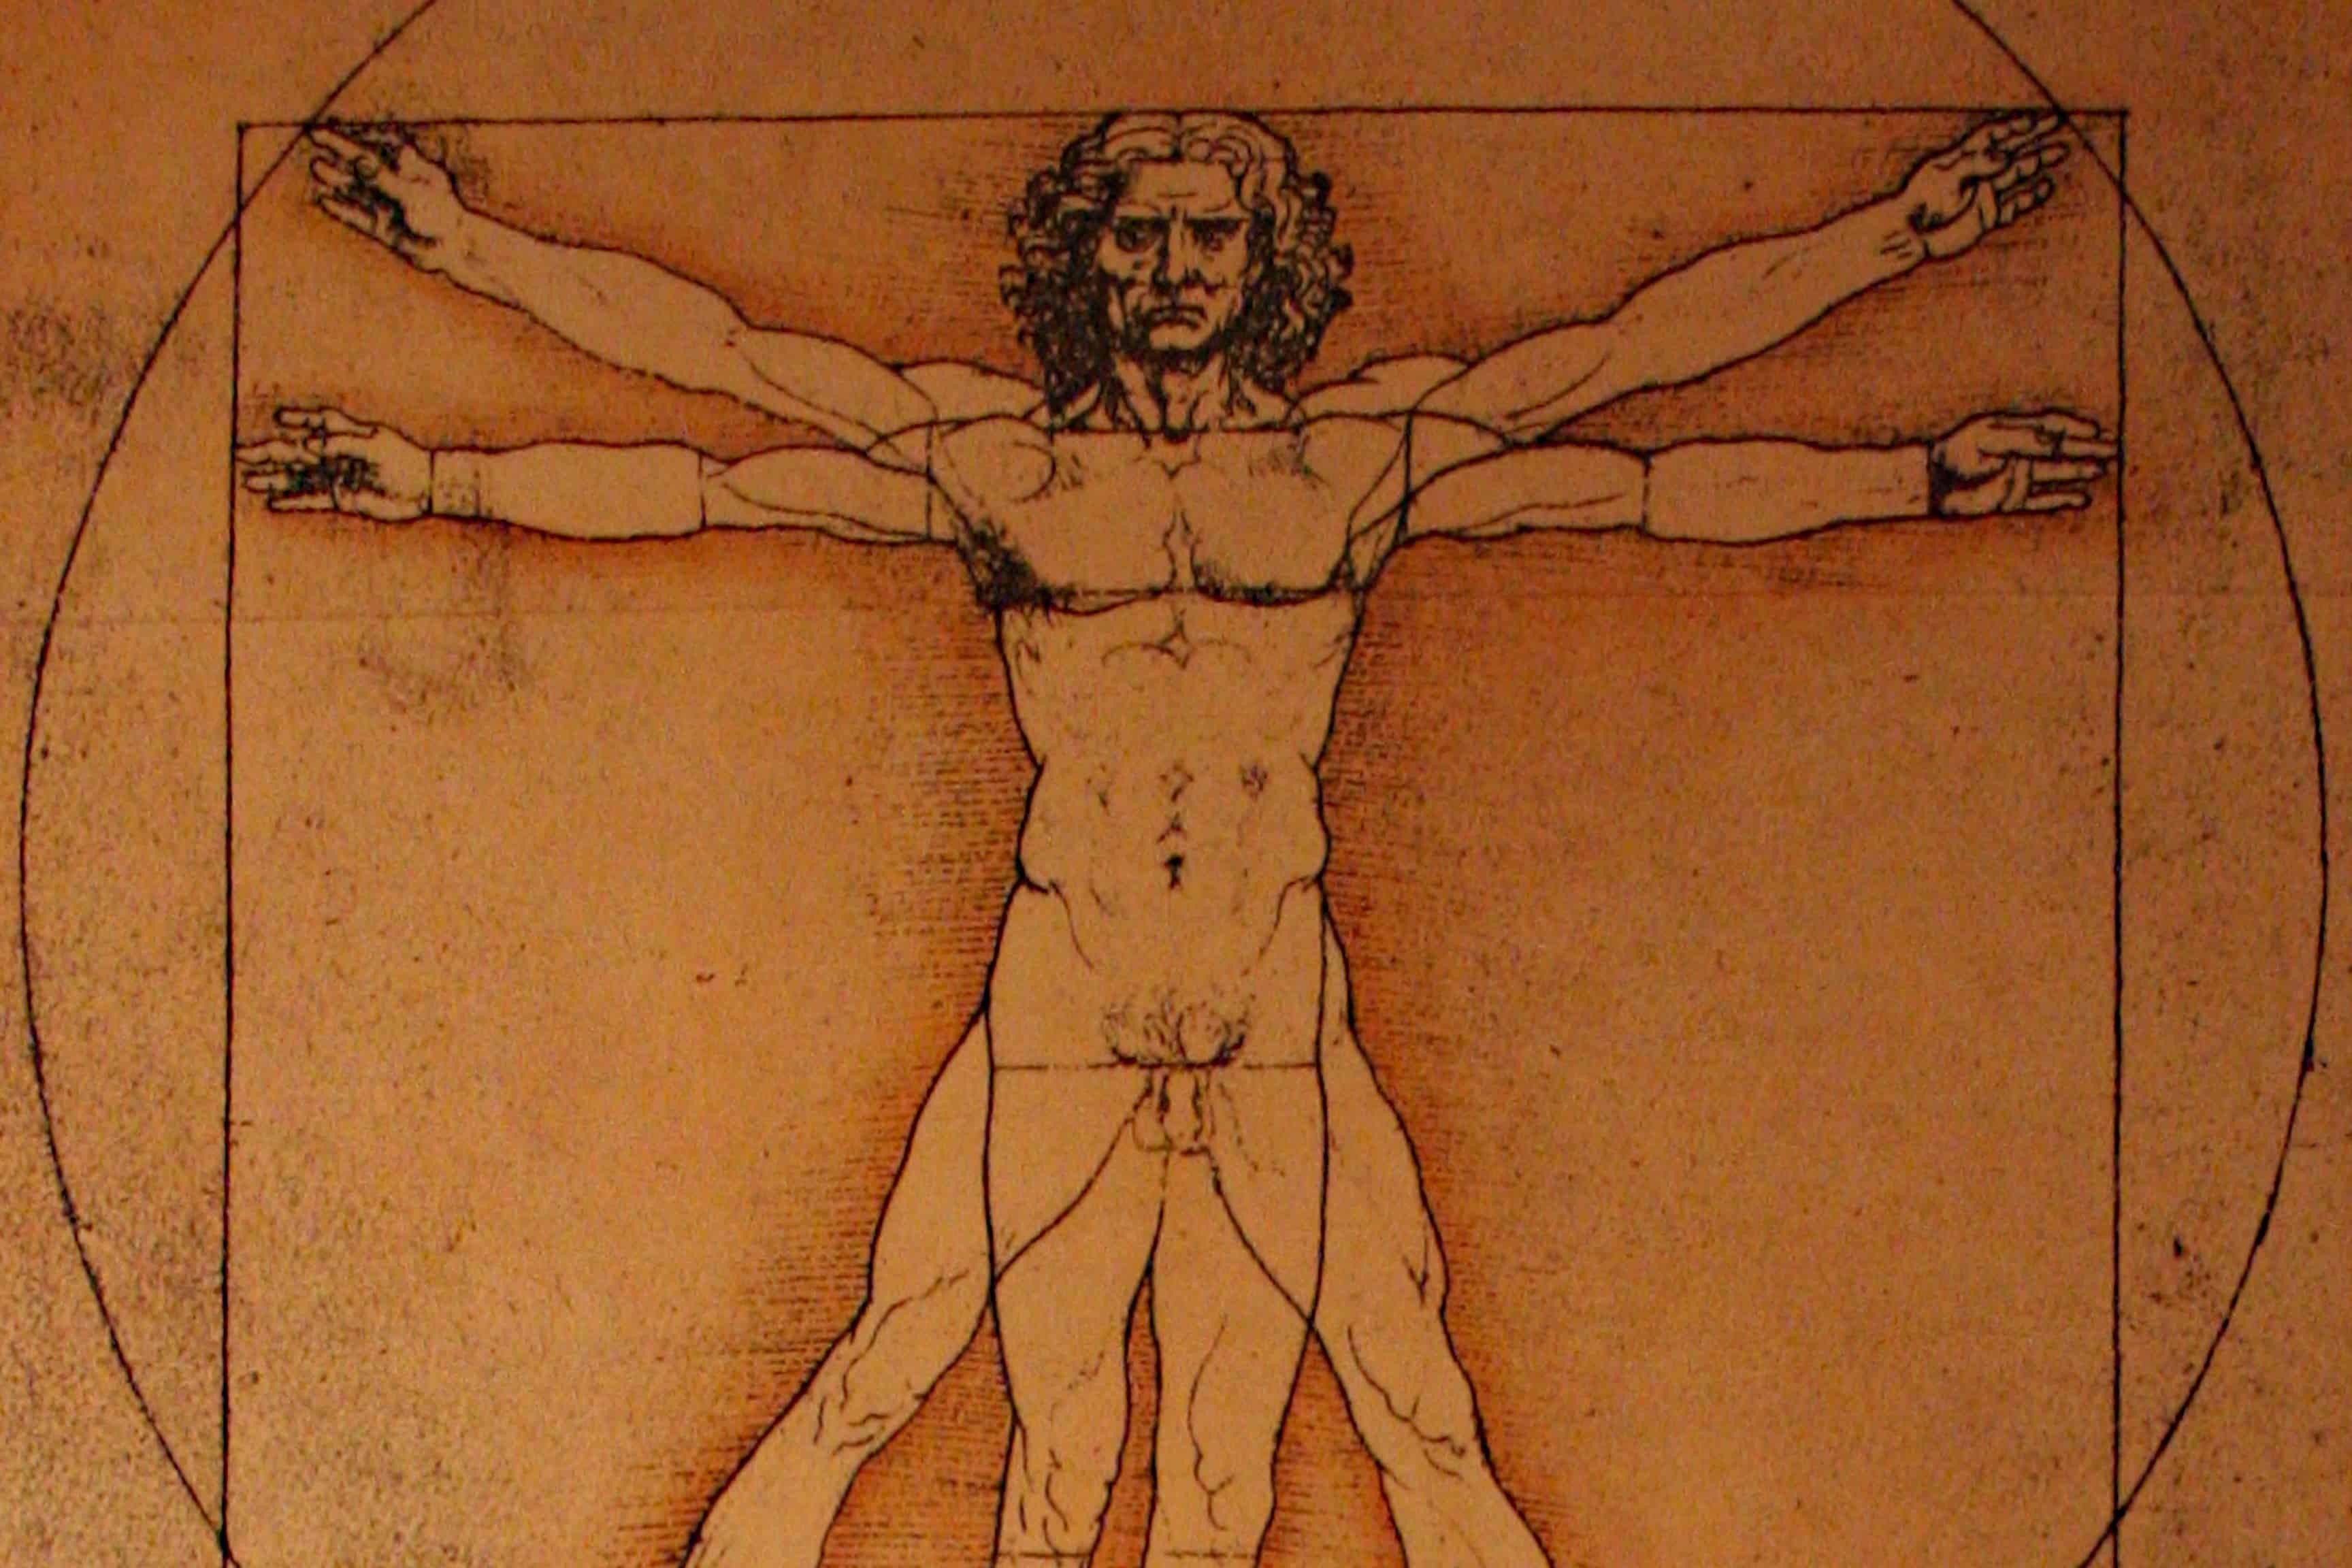 Тело возрождение. Витрувианский человек Леонардо да ви. Человек Леонардо да Винчи. Картина да Винчи человек Витрувианский. Золотое сечение человека Леонардо да Винчи Витрувианский человек.